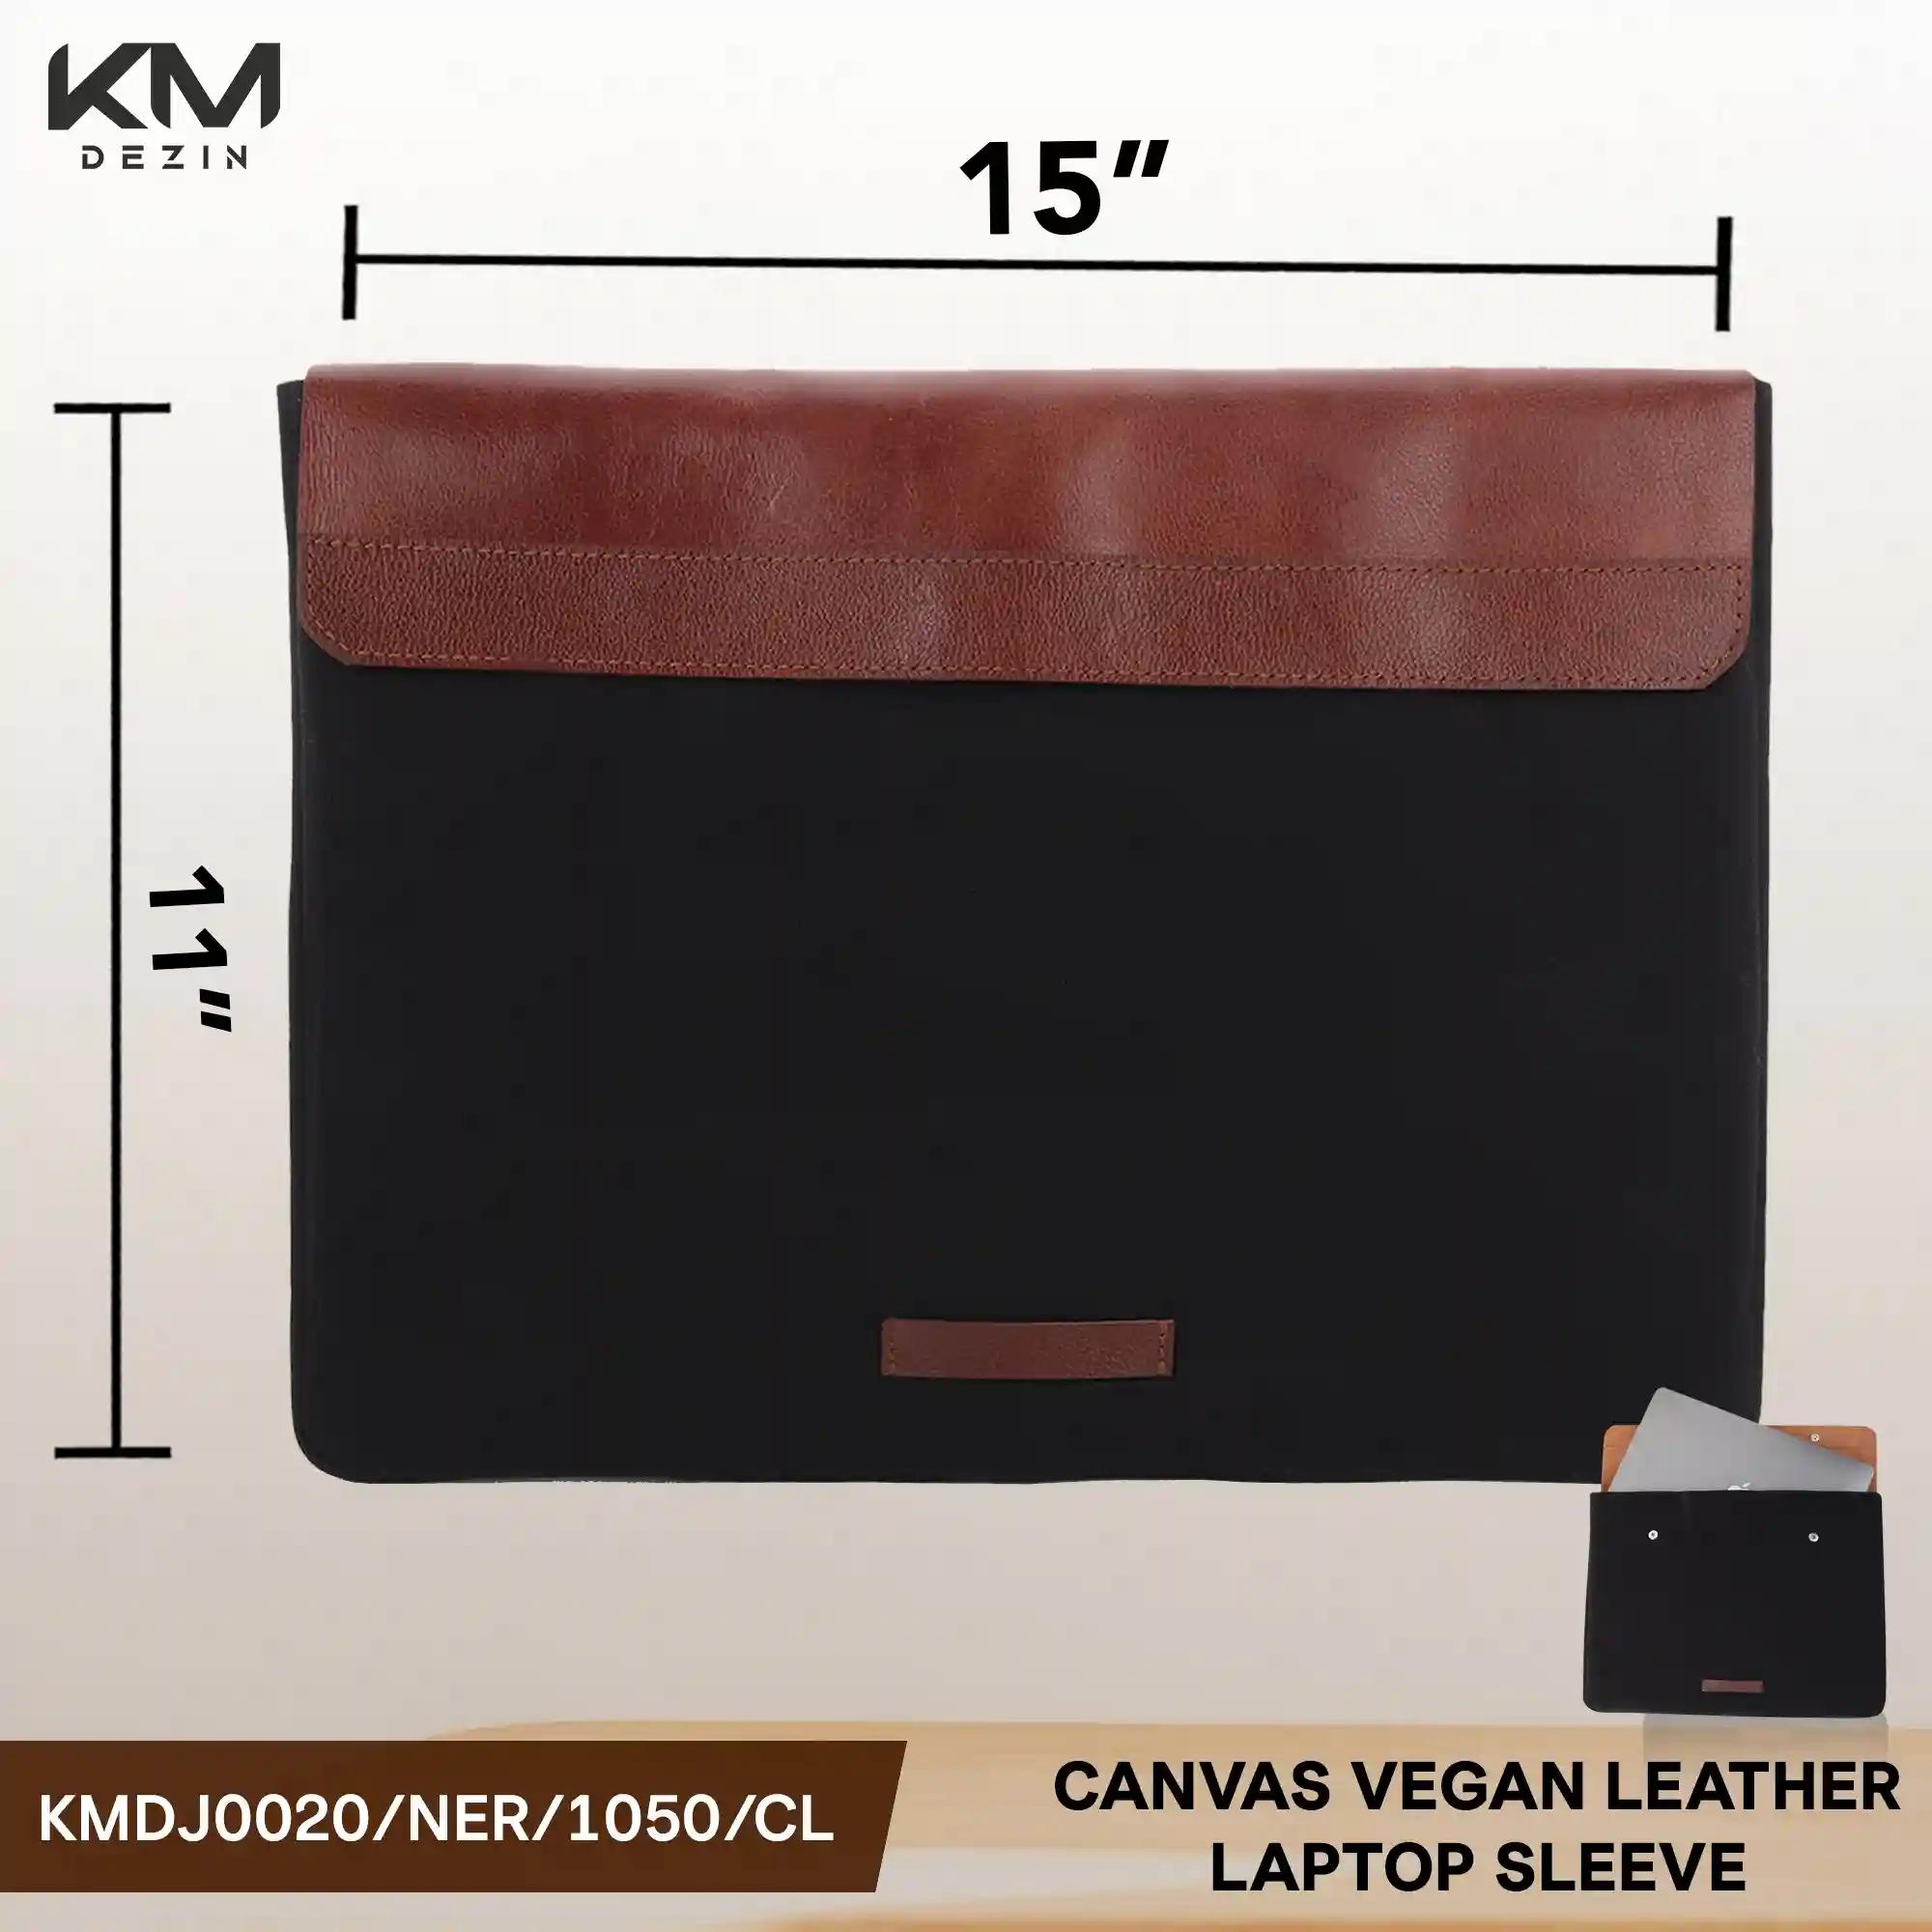 Canvas Vegan Leather Laptop Sleeve